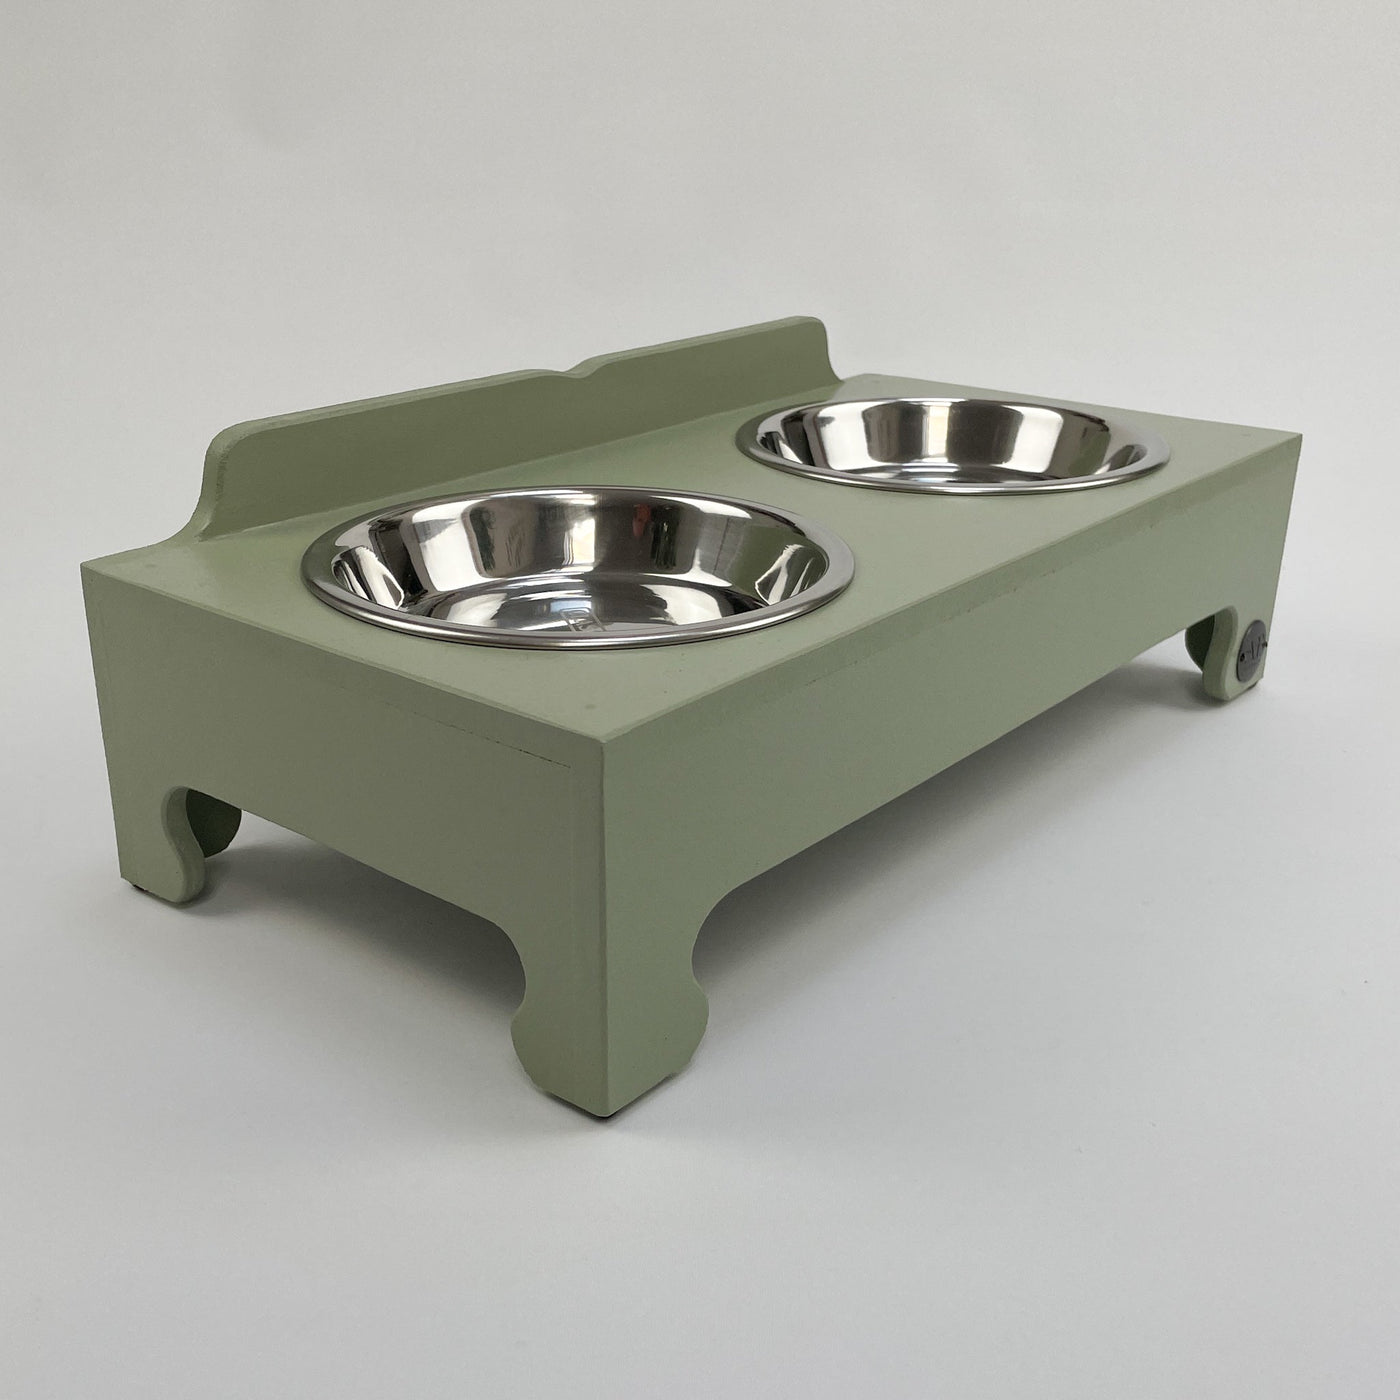 Soft green cat/puppy rasied bowl feeding stand.